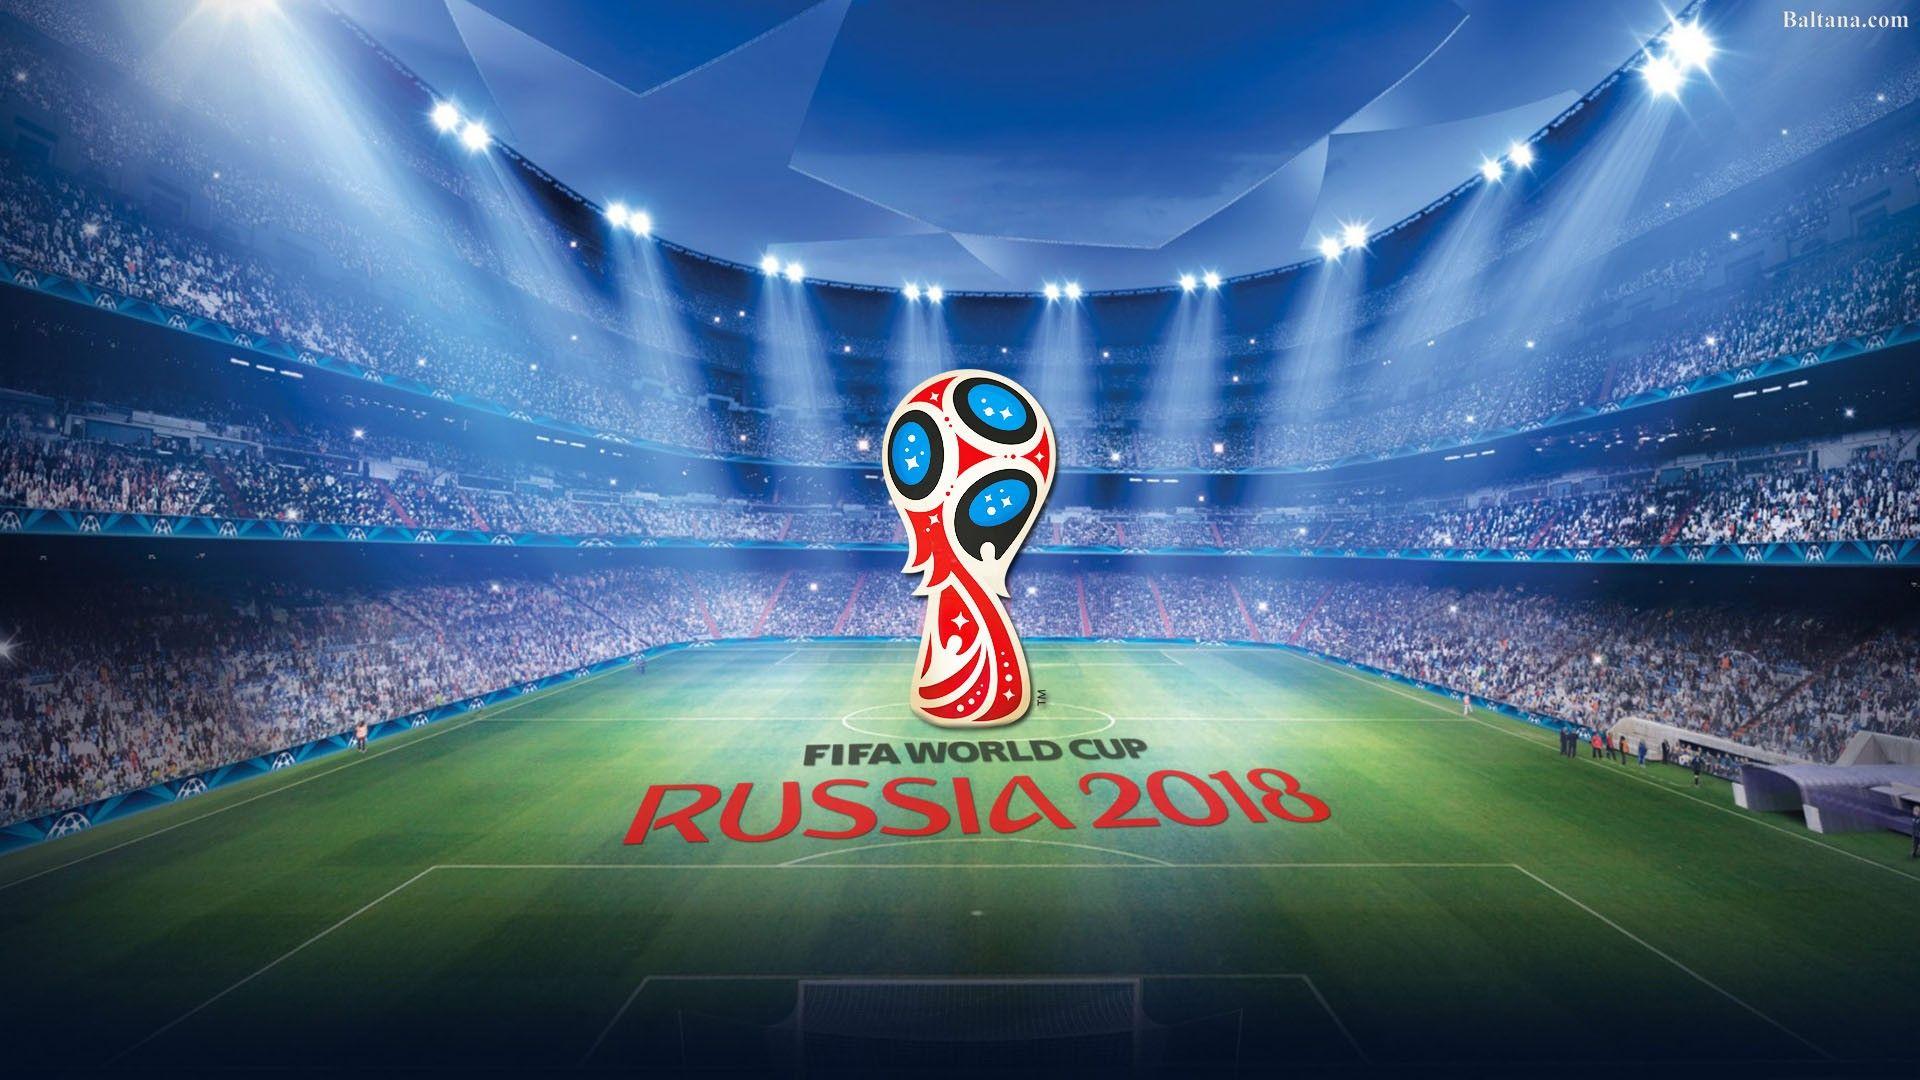 95 2018 FIFA World Cup Wallpapers  WallpaperSafari